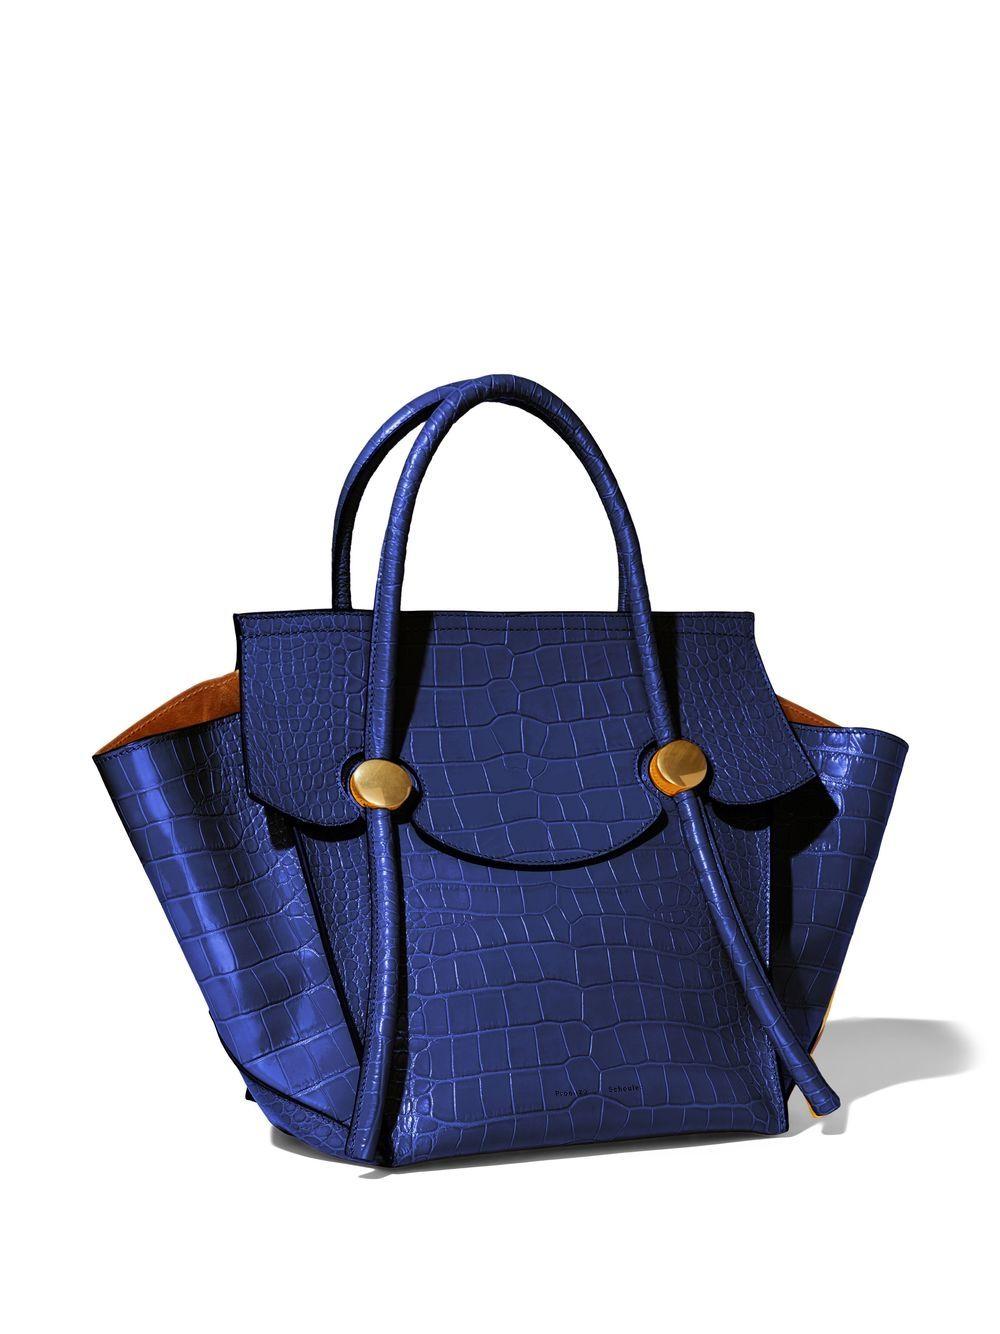 AURA Italian Made Navy Blue Crocodile Embossed Leather Tote Handbag:  Handbags: Amazon.com